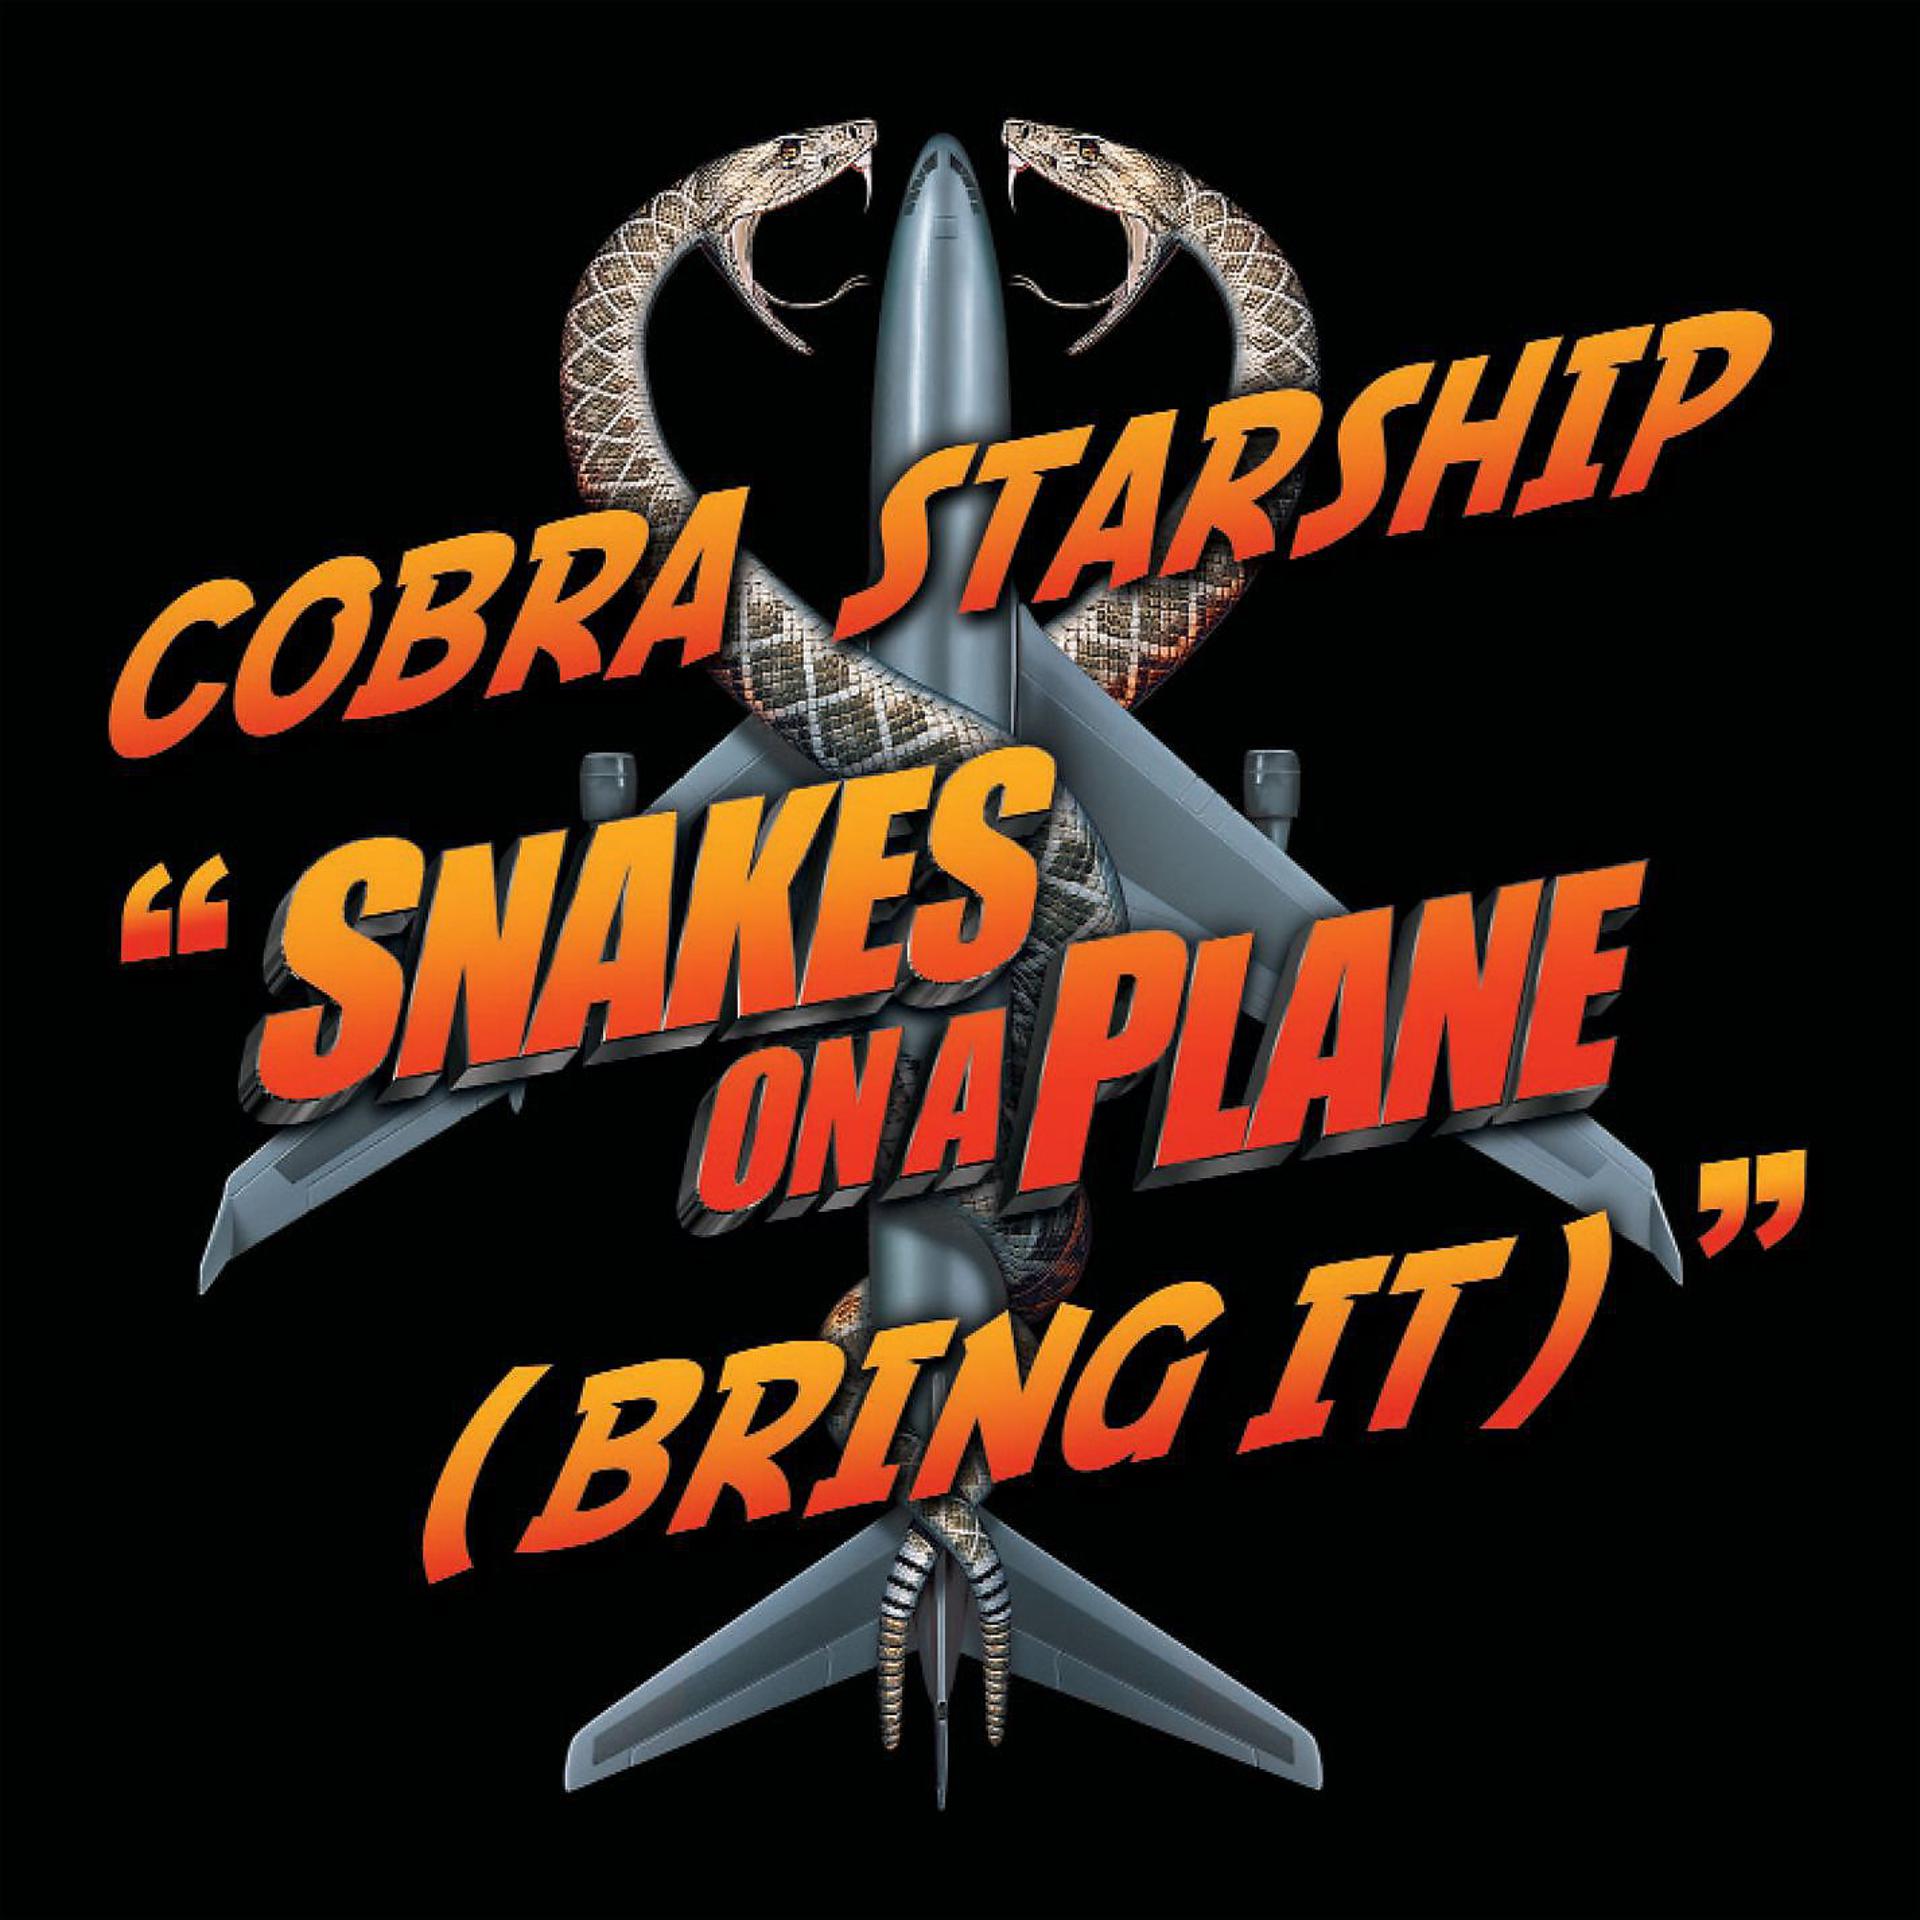 Cobra starship. Snakes on a plane Cobra Starship. Cobra Starship группа мерч. Гейб сапорта Cobra Starship.